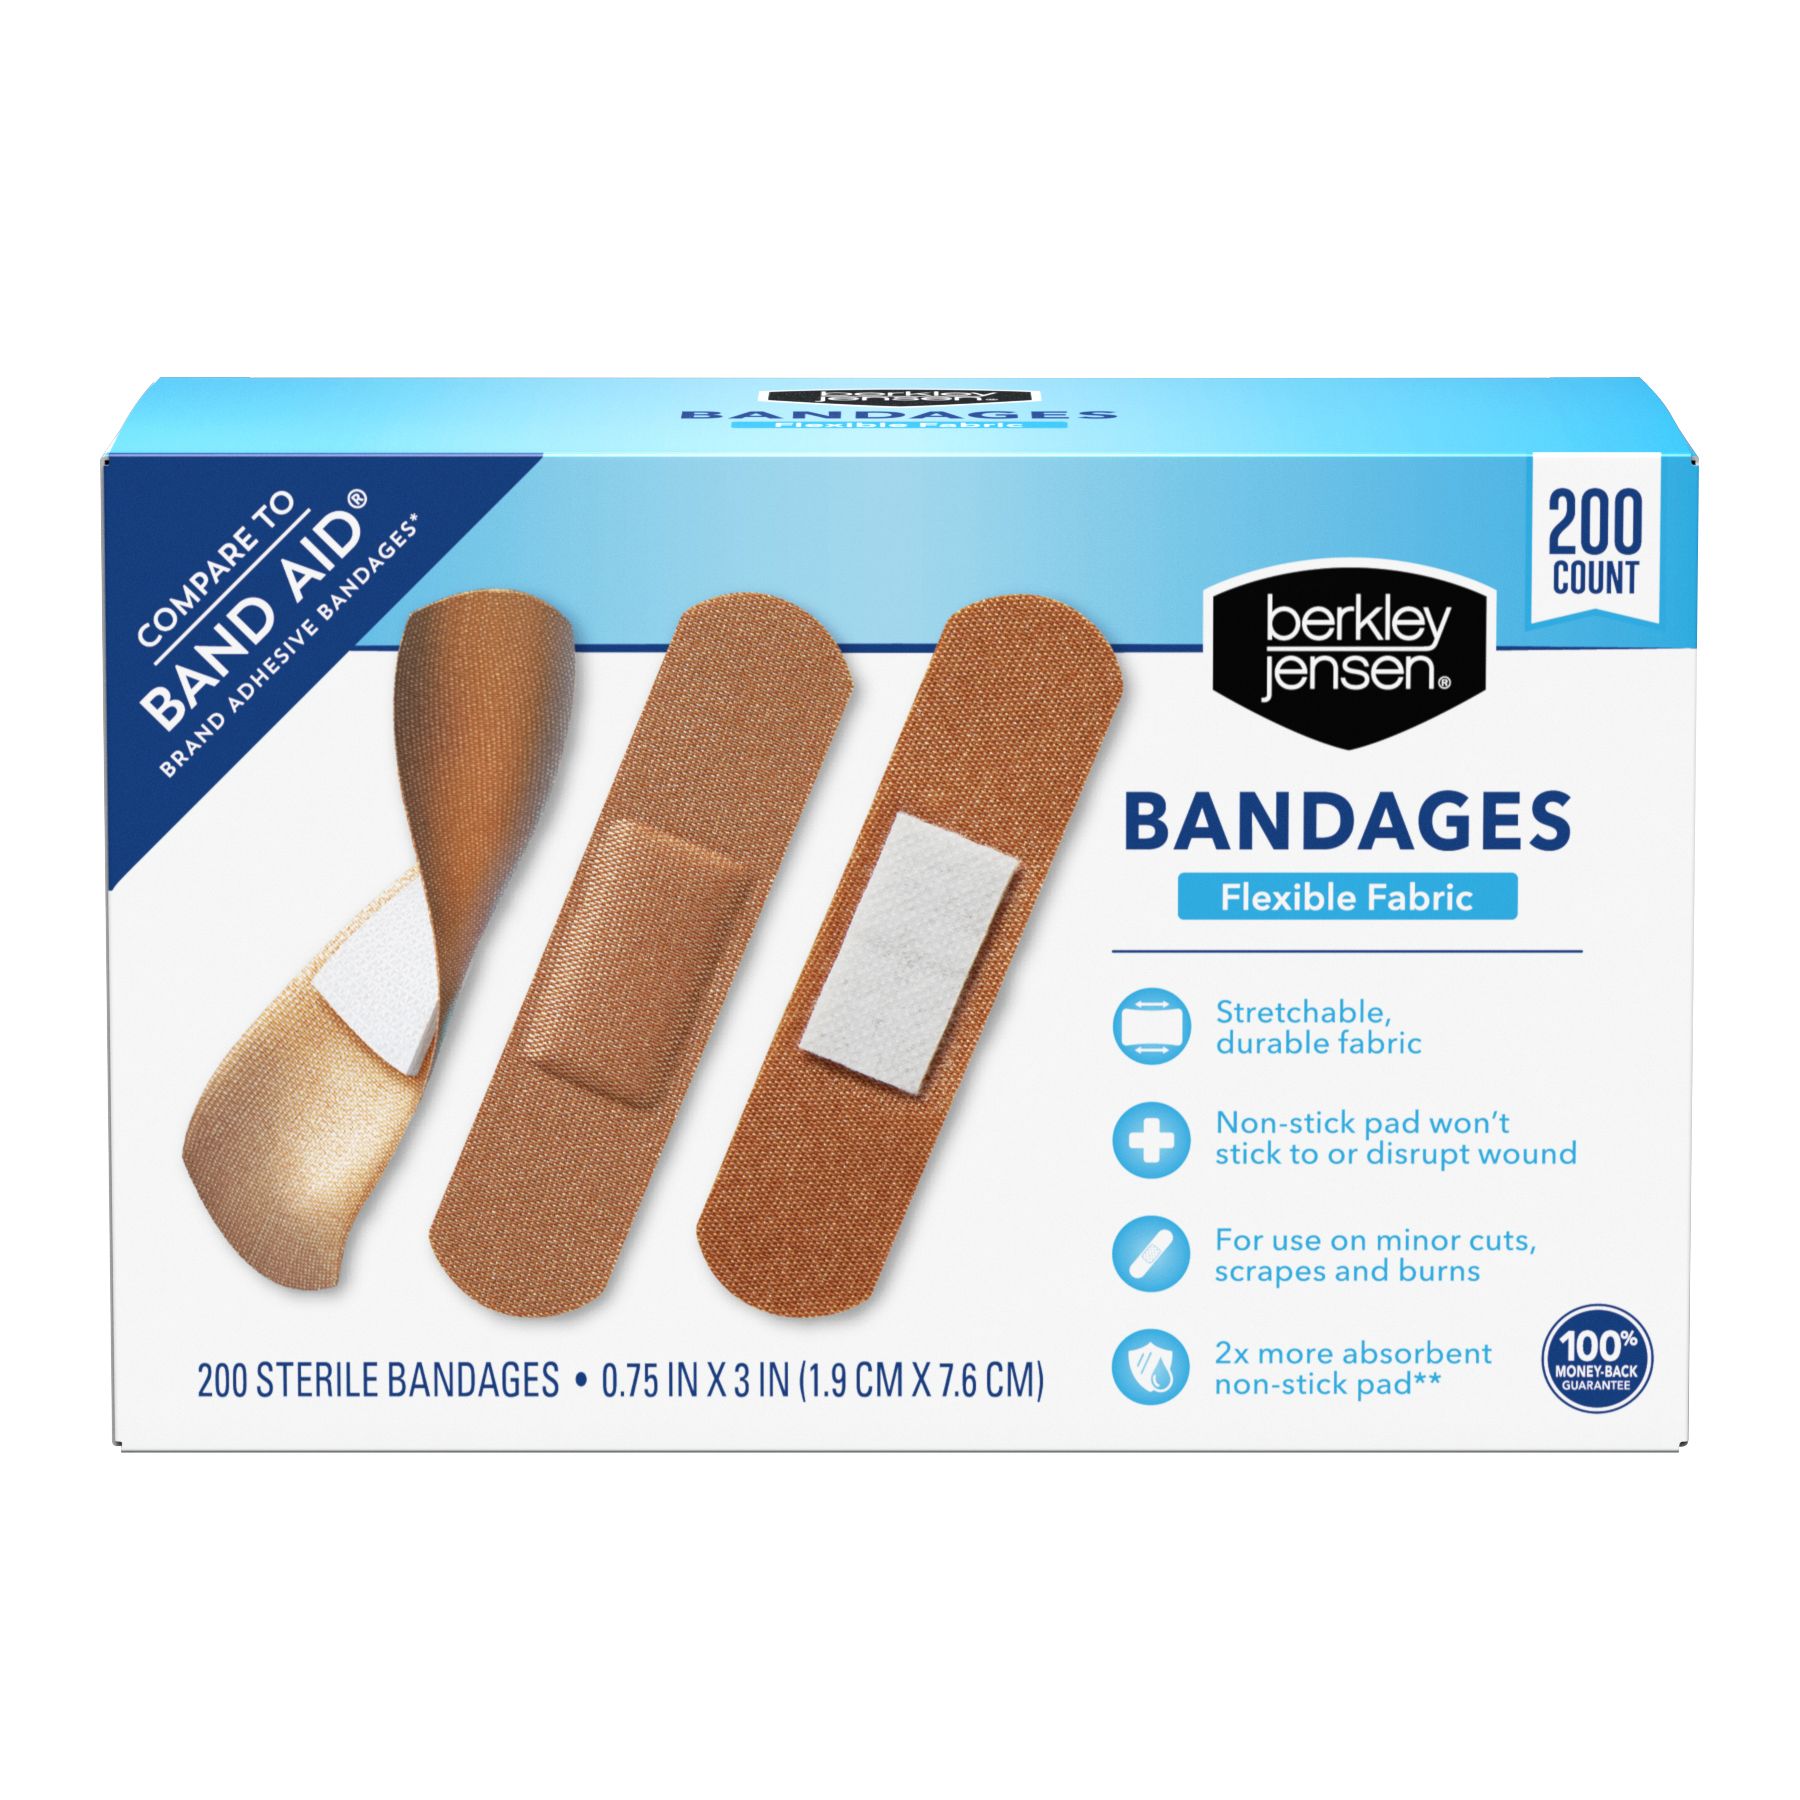 Berkley Jensen Flex-Fabric Bandage, 3/4 x 3, 200 ct.